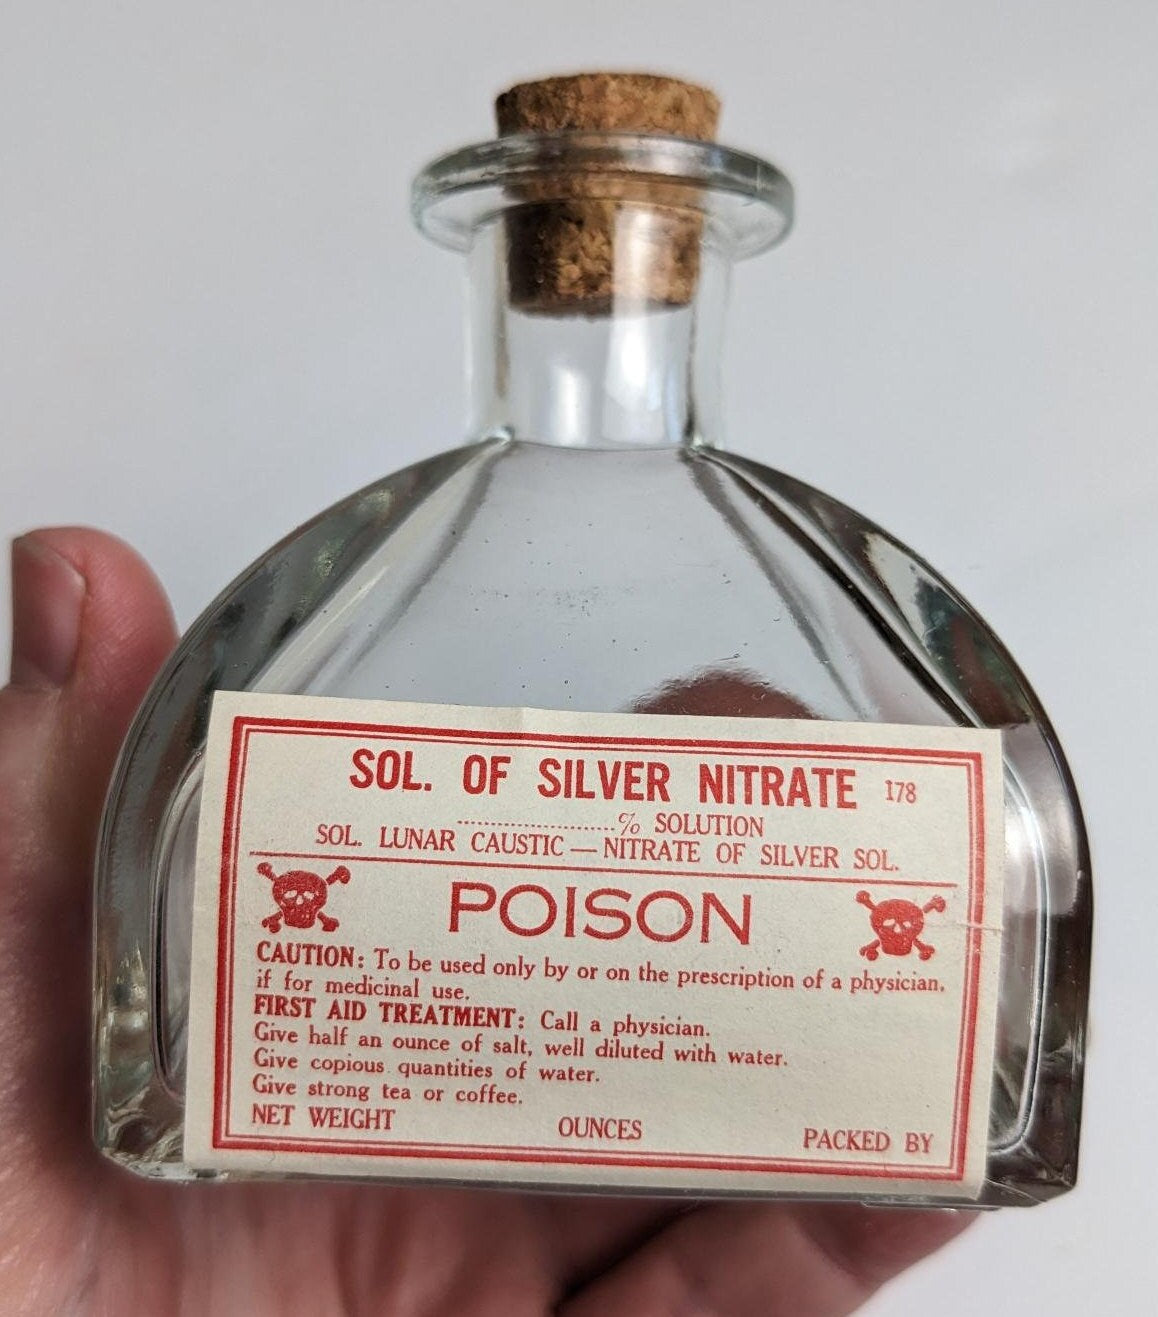 Vintage Antique Style Poison Drug Store Bottles - Denatured Alcohol, Cresolis Comp. and Silver Nitrate Labels